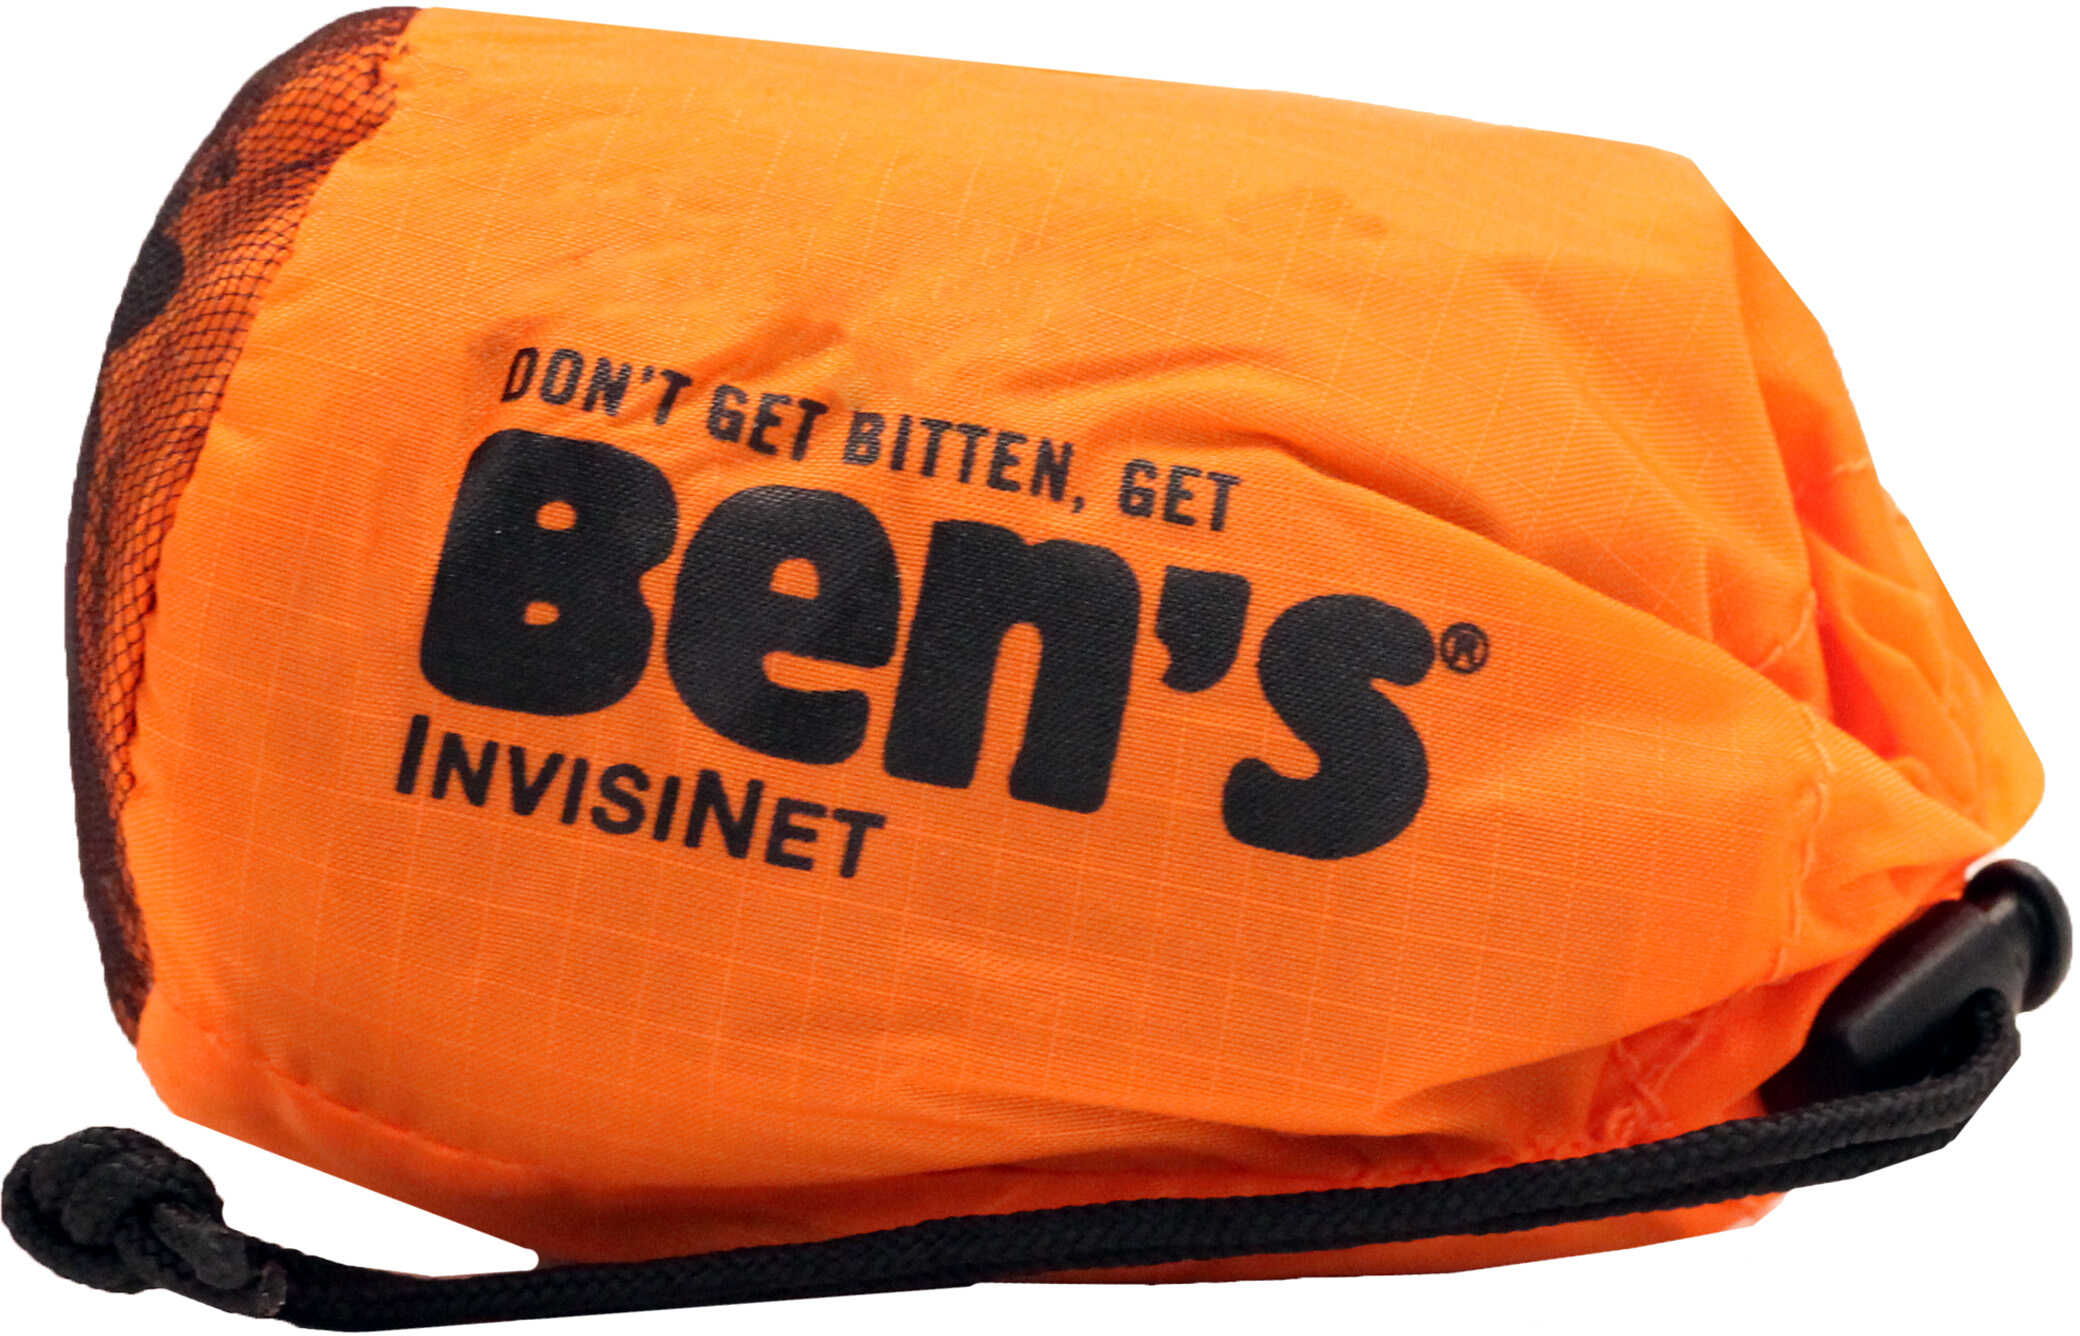 Bens / Tender Corp InvisiNet Head Net Md: 0006-7200